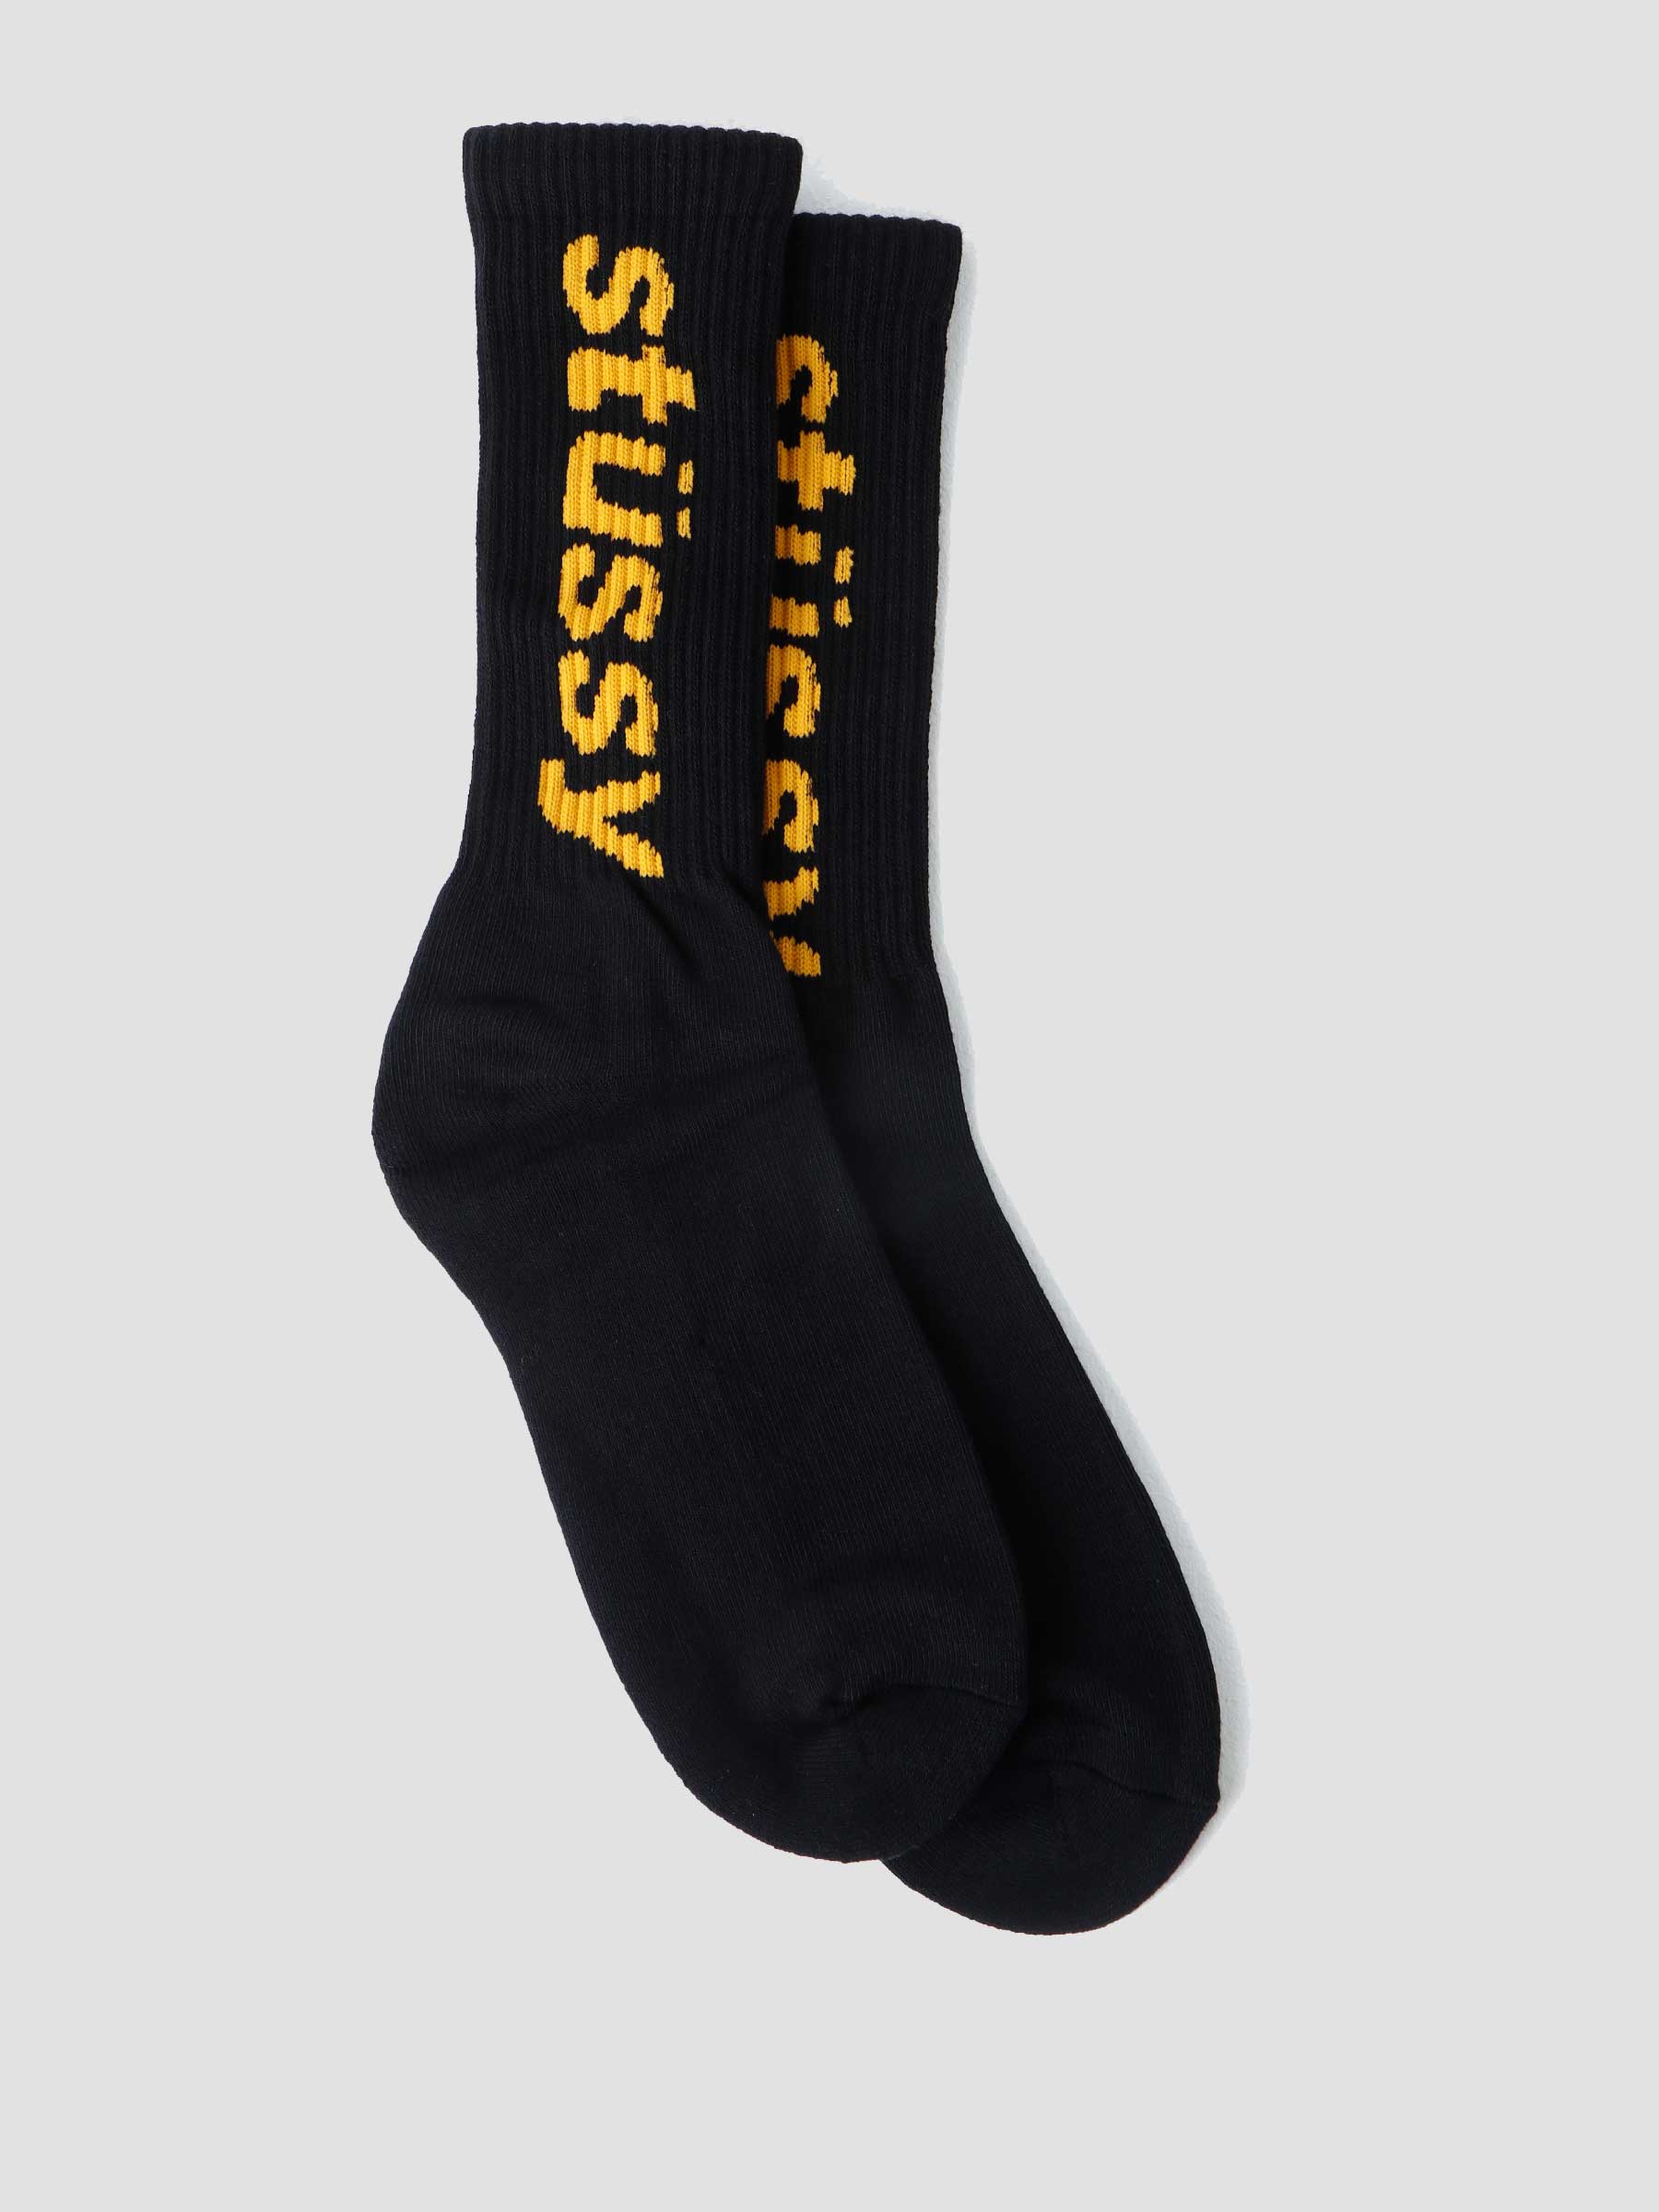 Helvetica Crewneck Socks Black Yellow 138845-1801